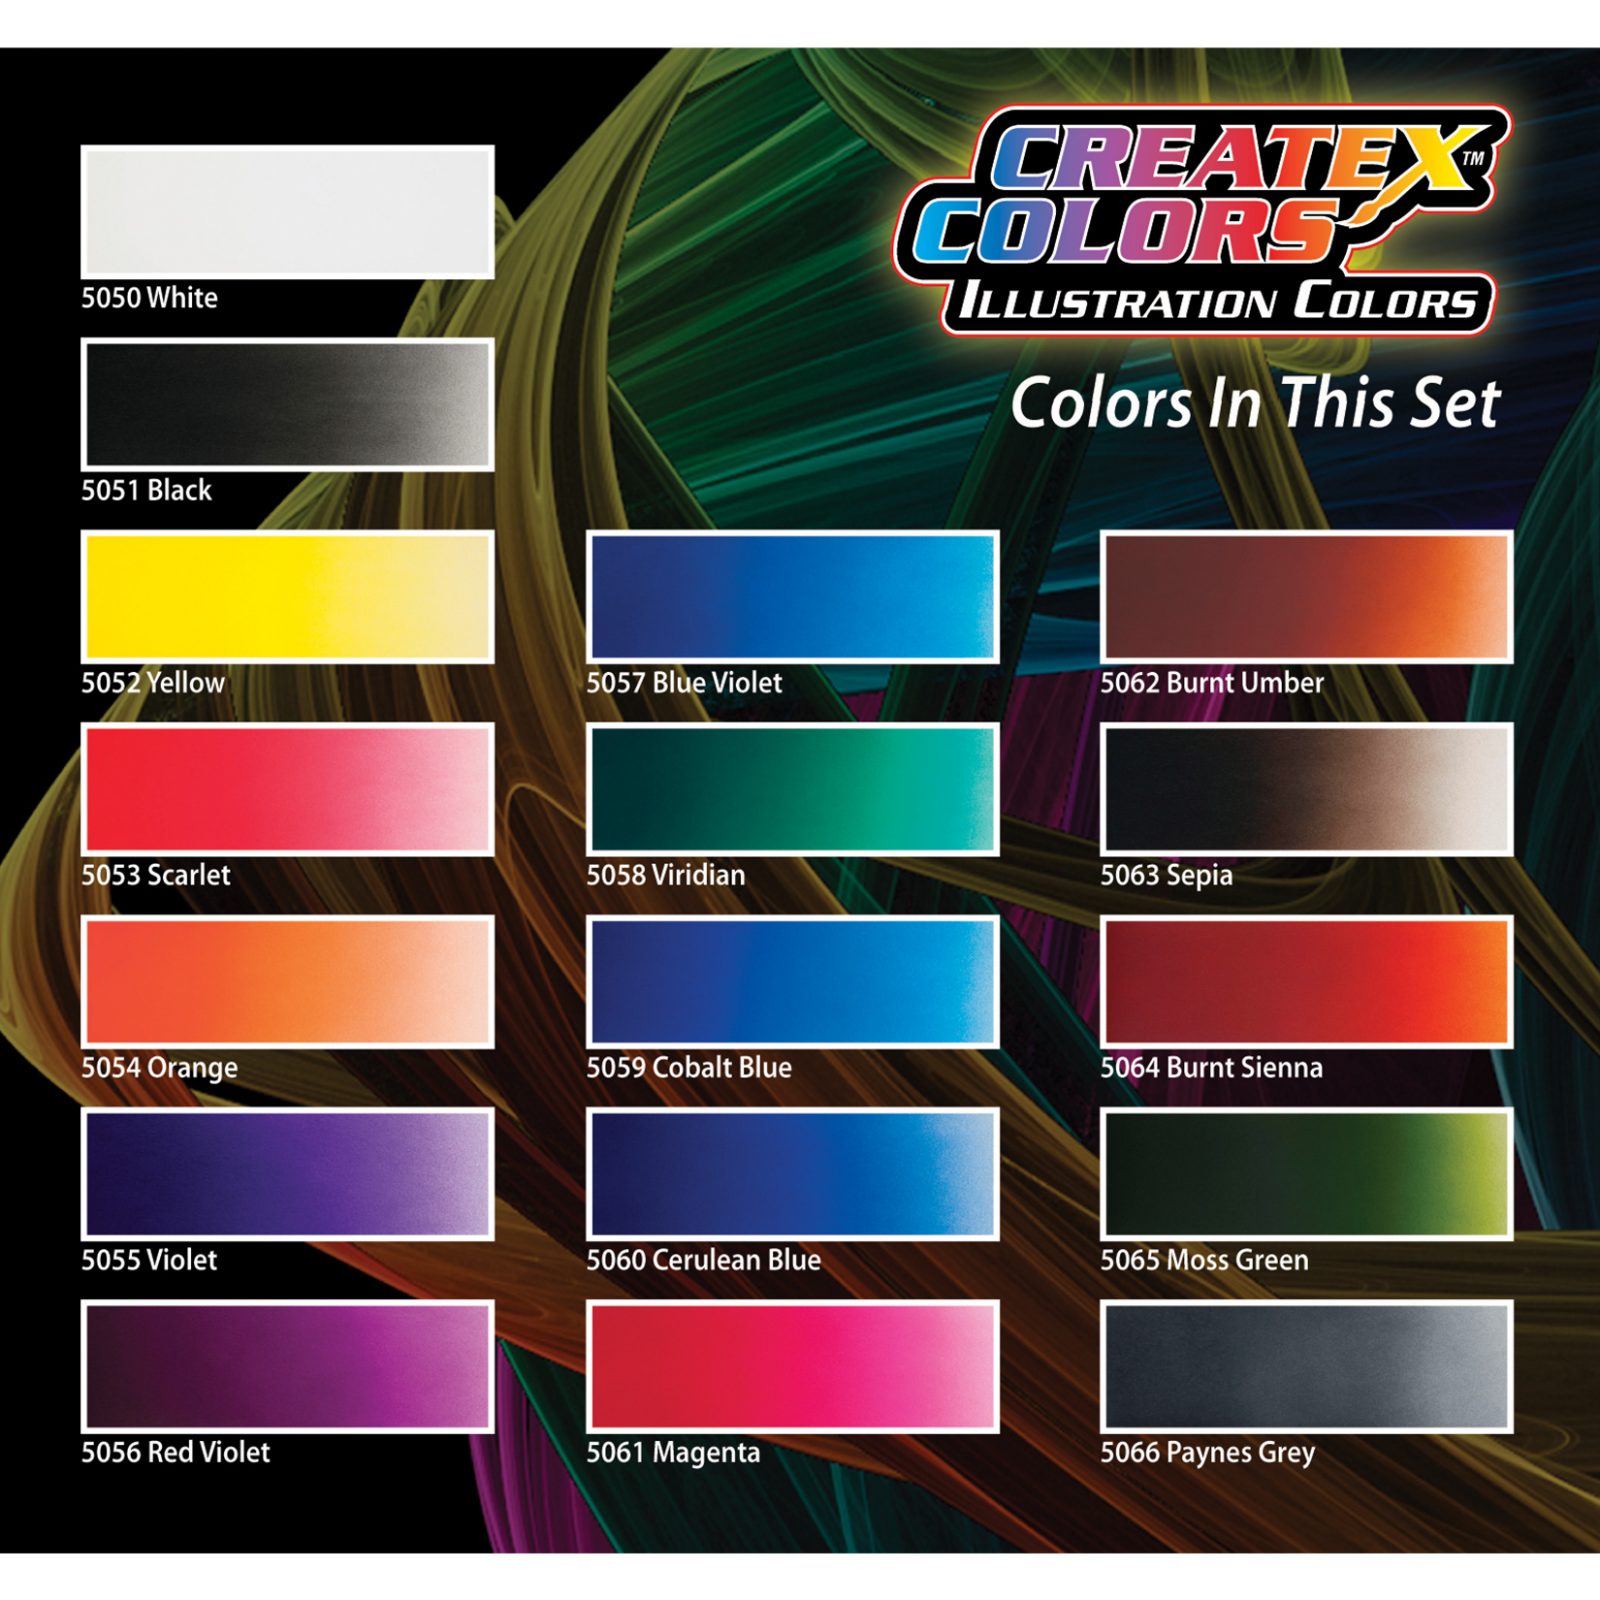 5814-01 Createx 12 Airbrush Color Paint Set